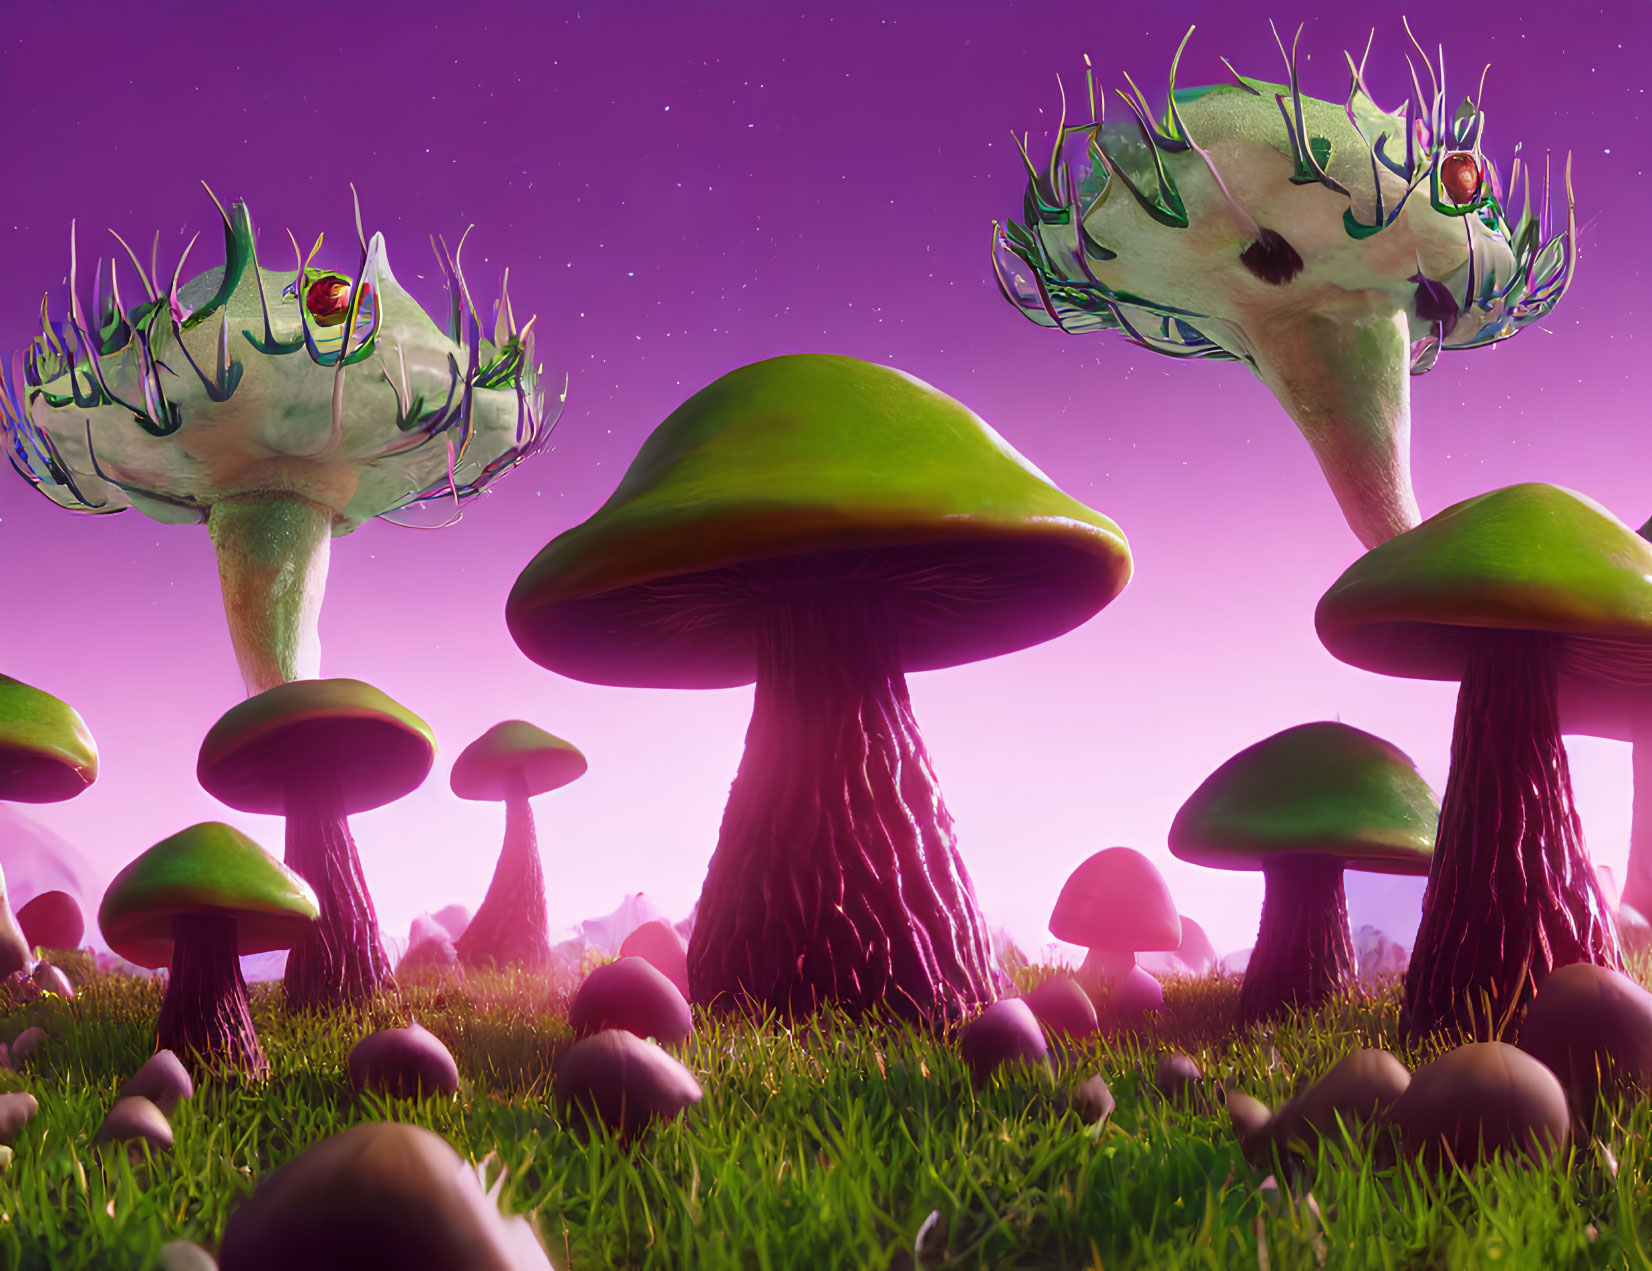 Fantasy mushrooms in colorful, surreal landscape under purple starry sky